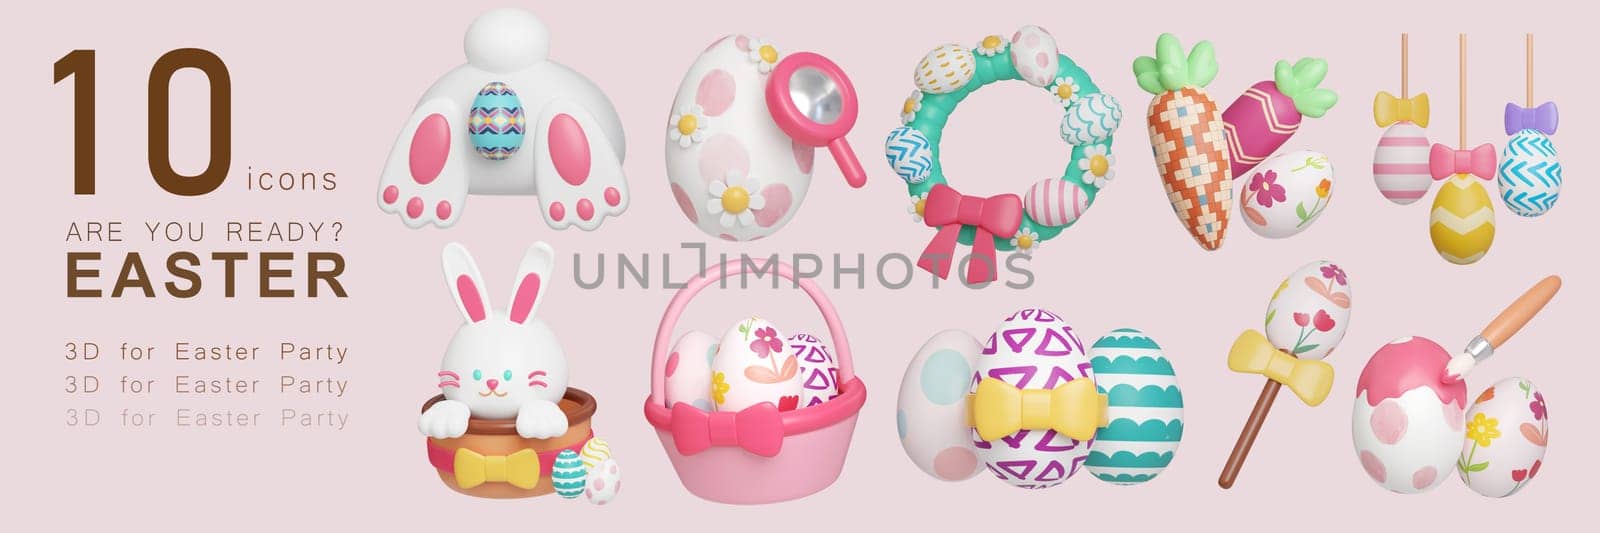 3D illustrated cute festive set of Easter Egg icons. rabbit, carrot, basket, candy, art, 3D Illustration Easter festive..